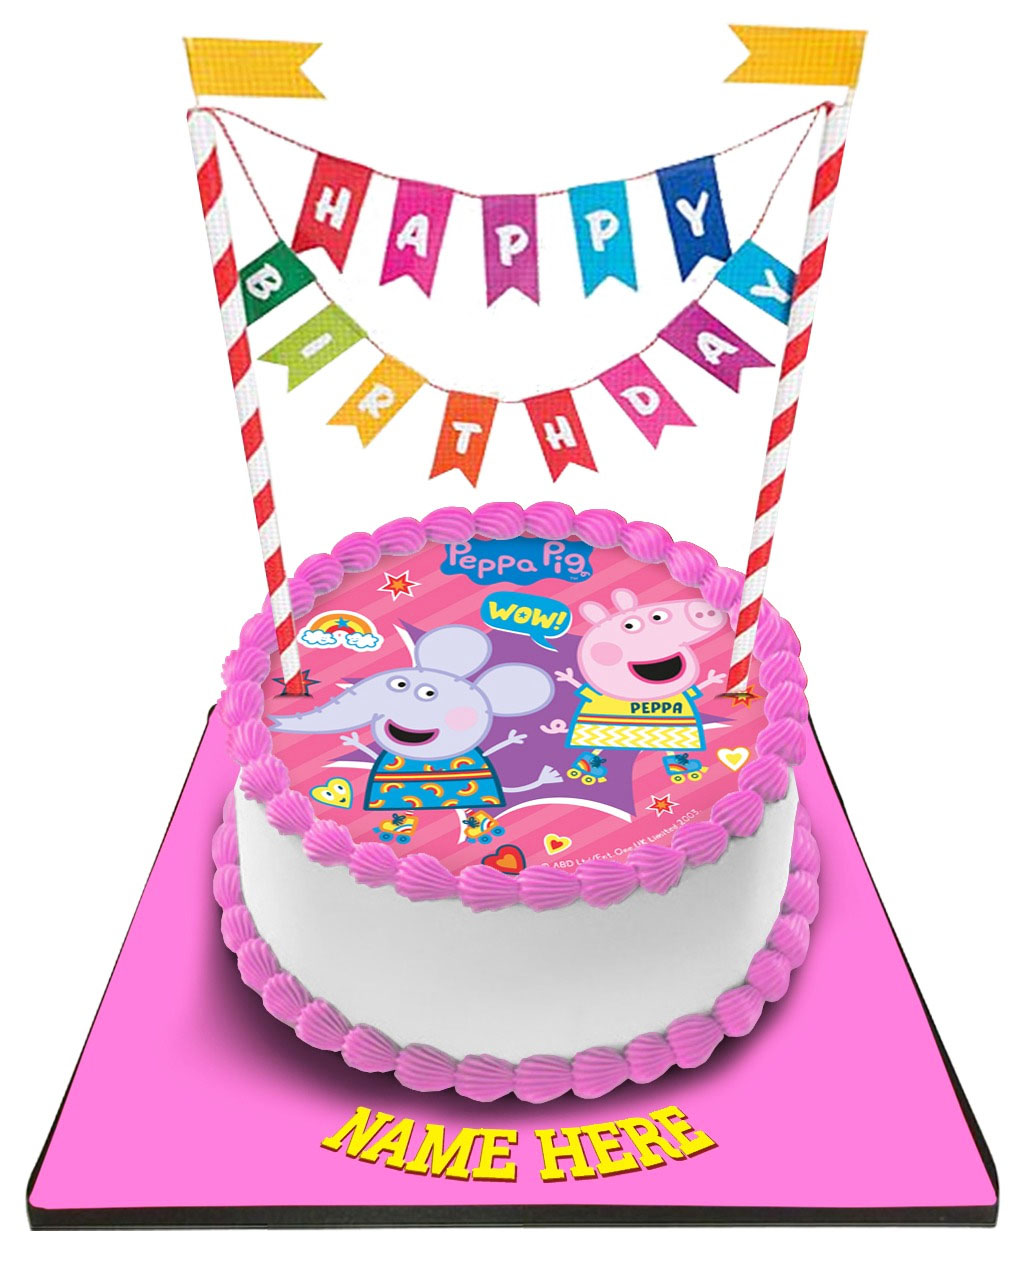 Peppa Pig Cake with Happy Birthday Bunting